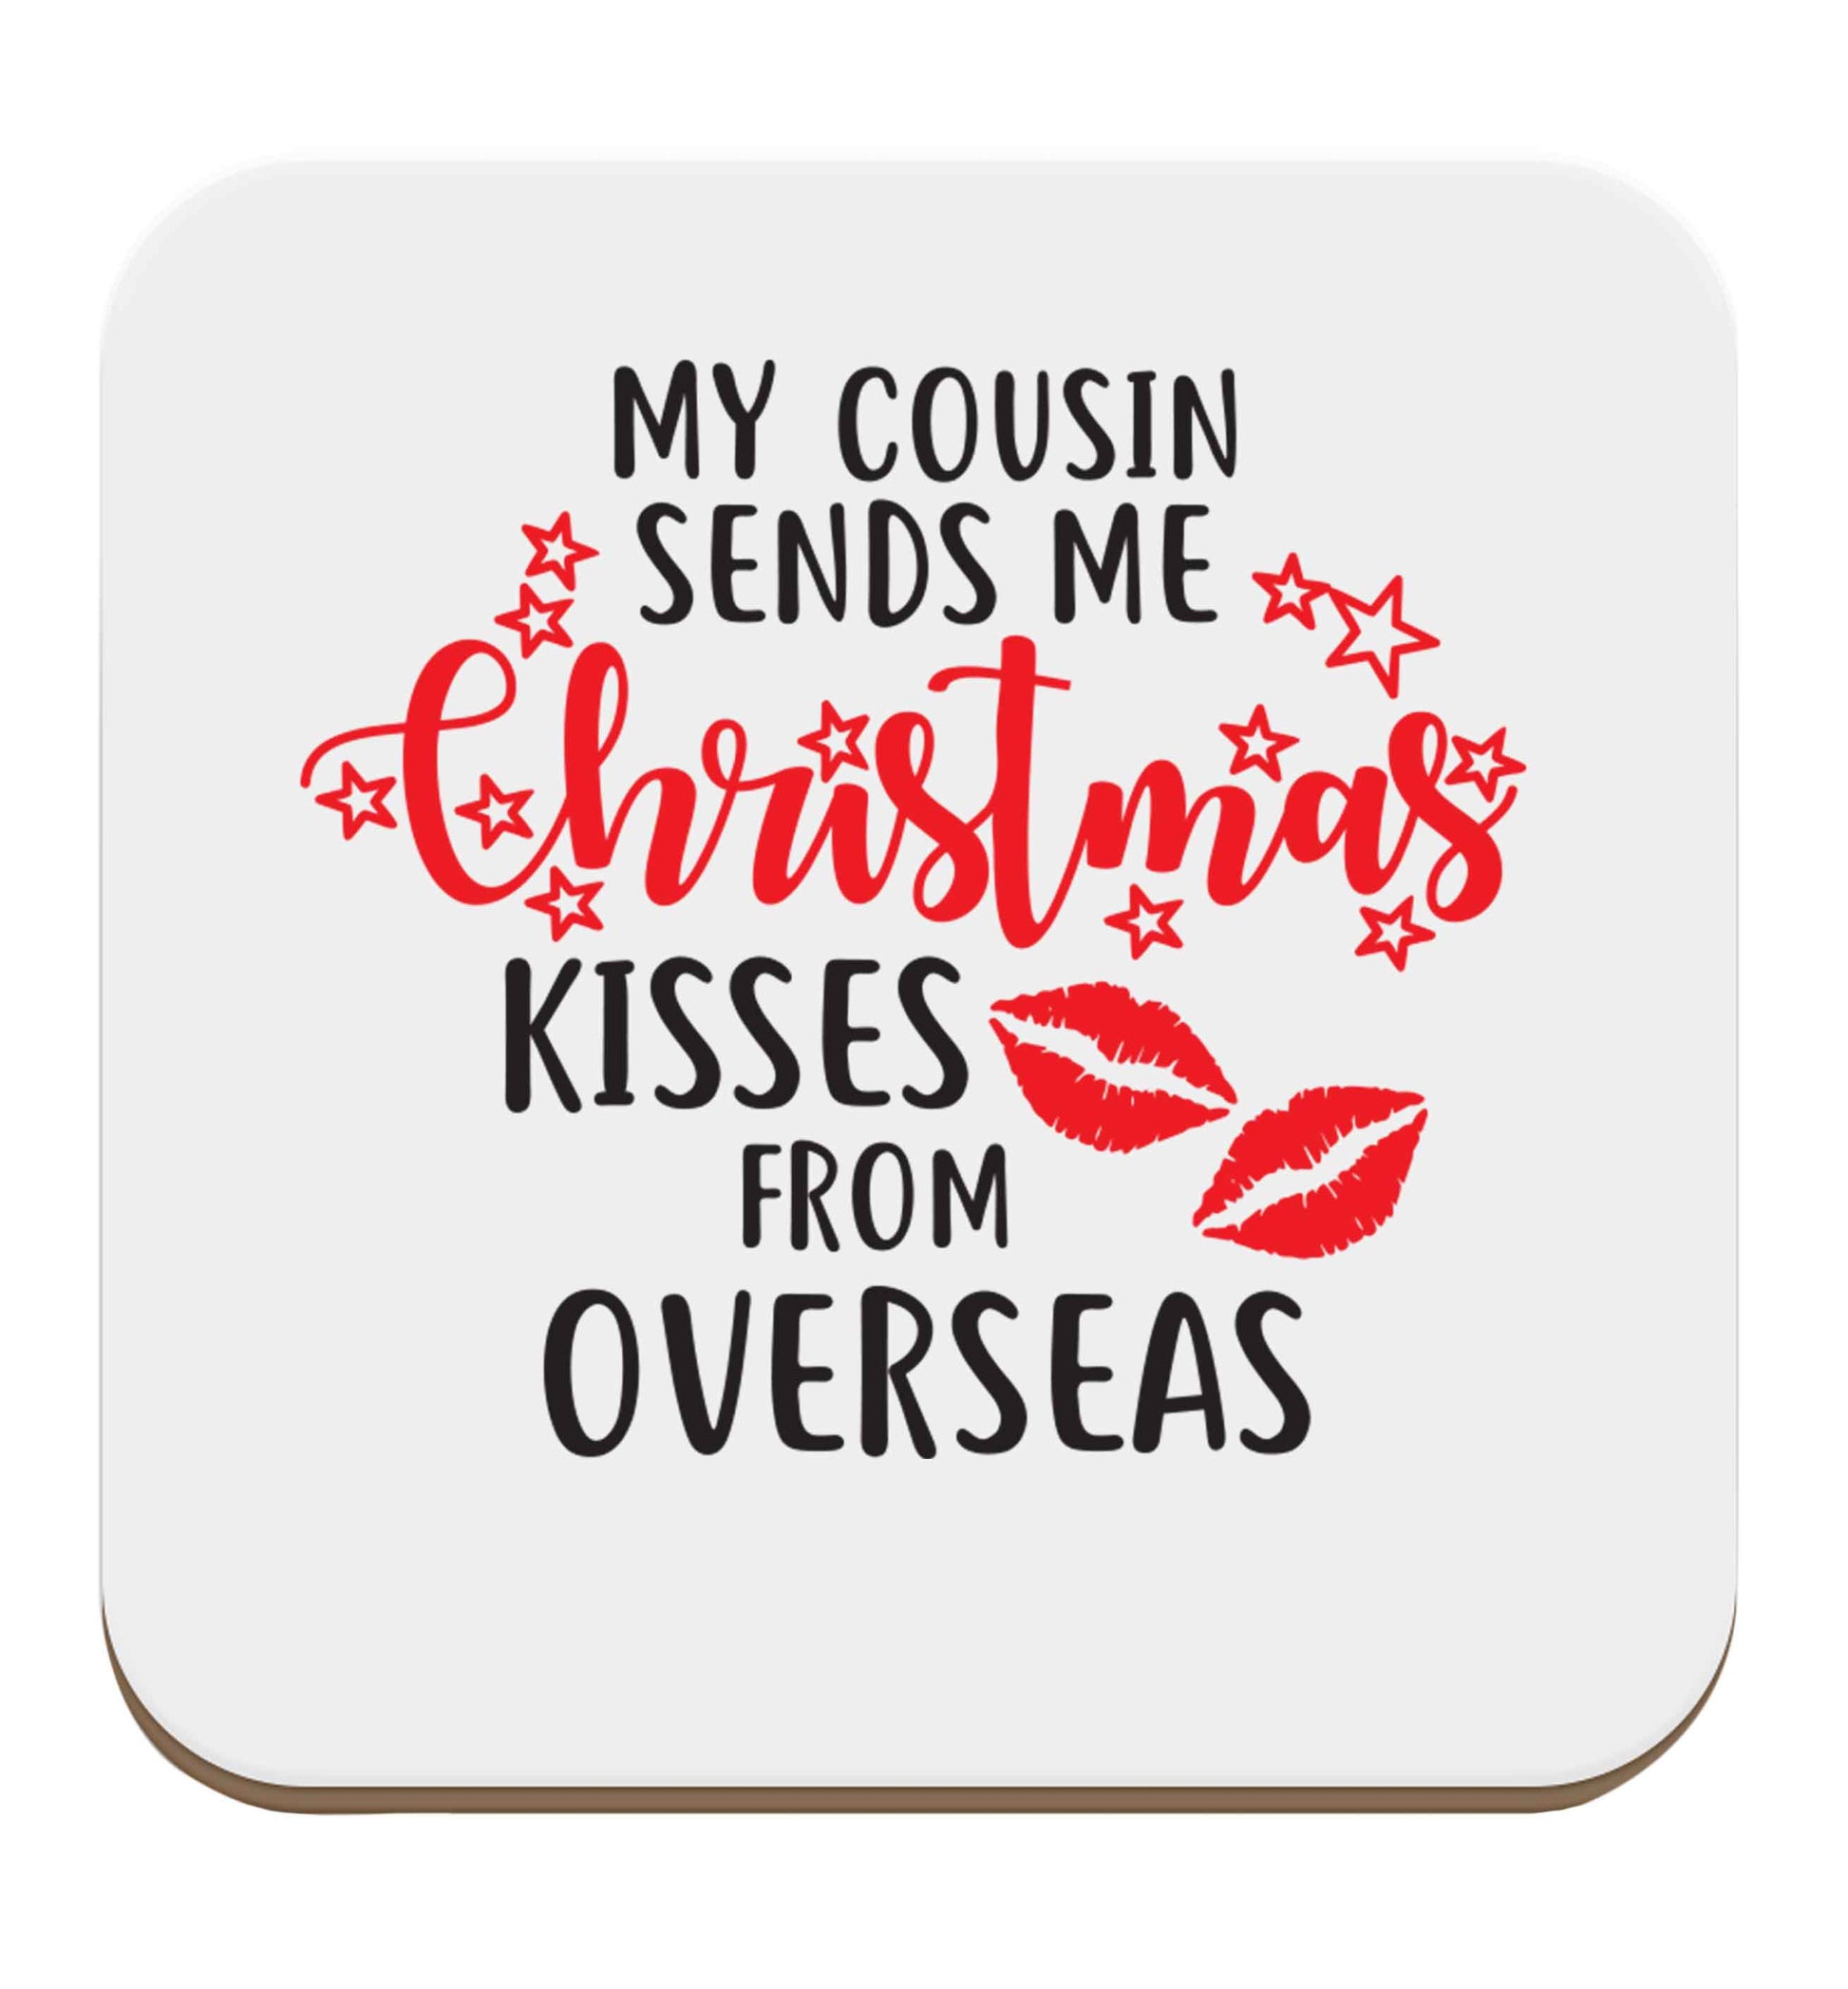 Auntie Christmas Kisses Overseas set of four coasters